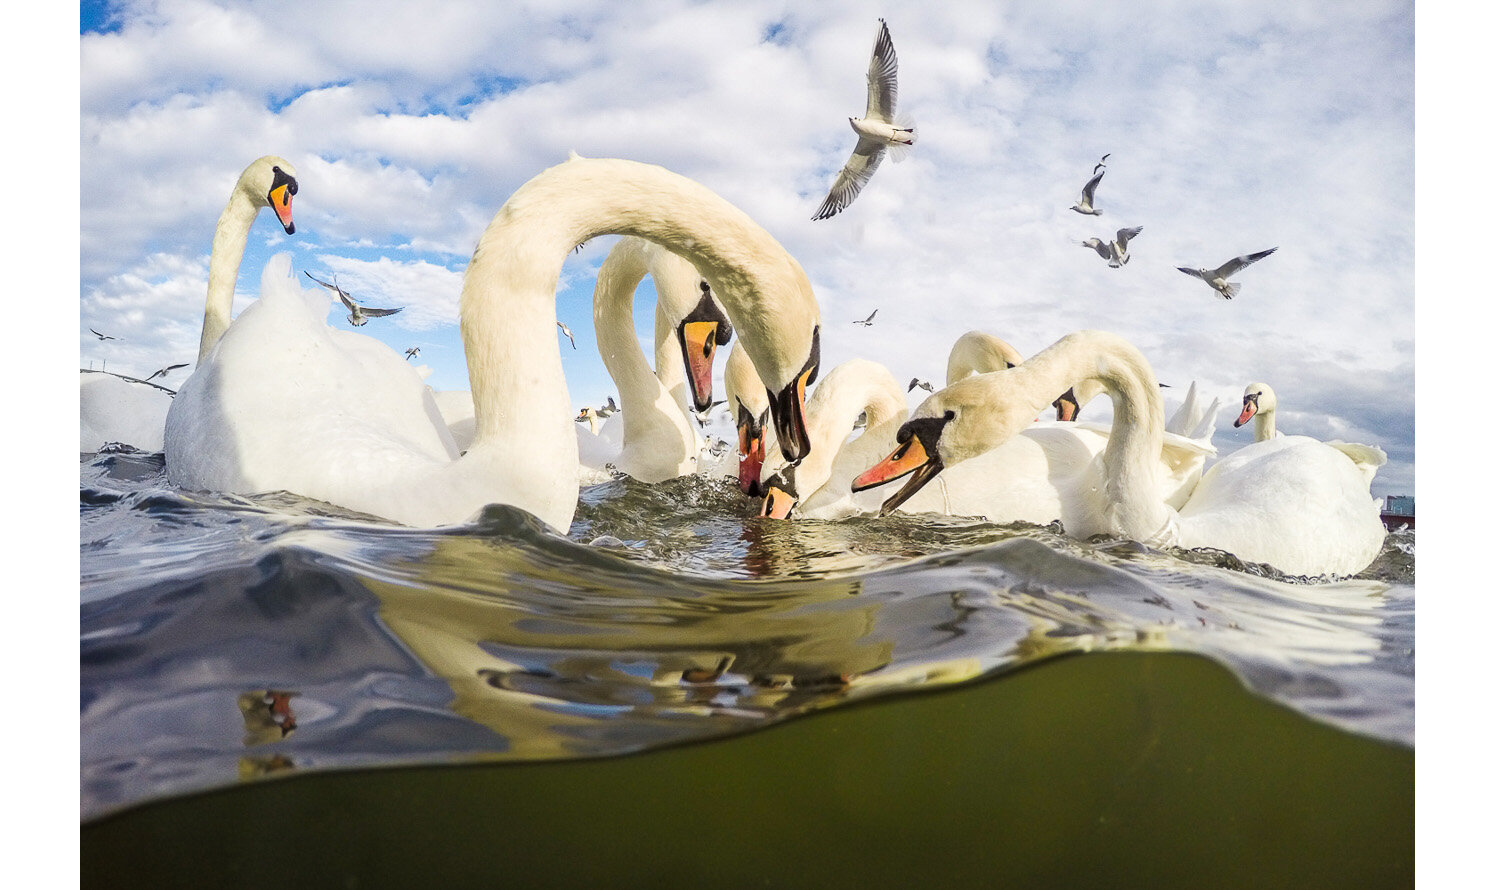  Mute swans having a dispute 